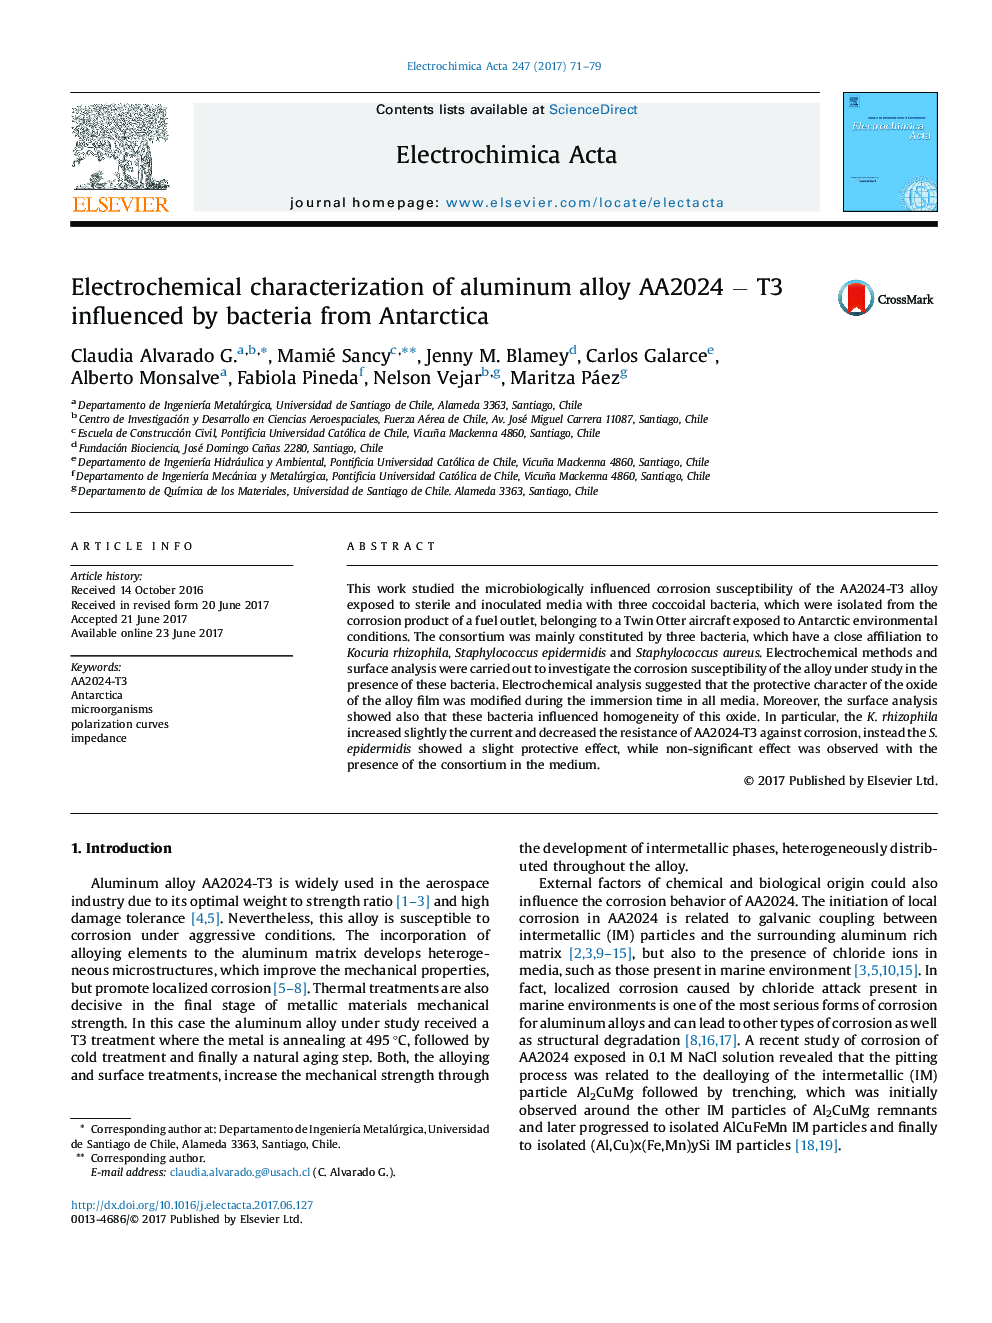 Electrochemical characterization of aluminum alloy AA2024 â T3 influenced by bacteria from Antarctica